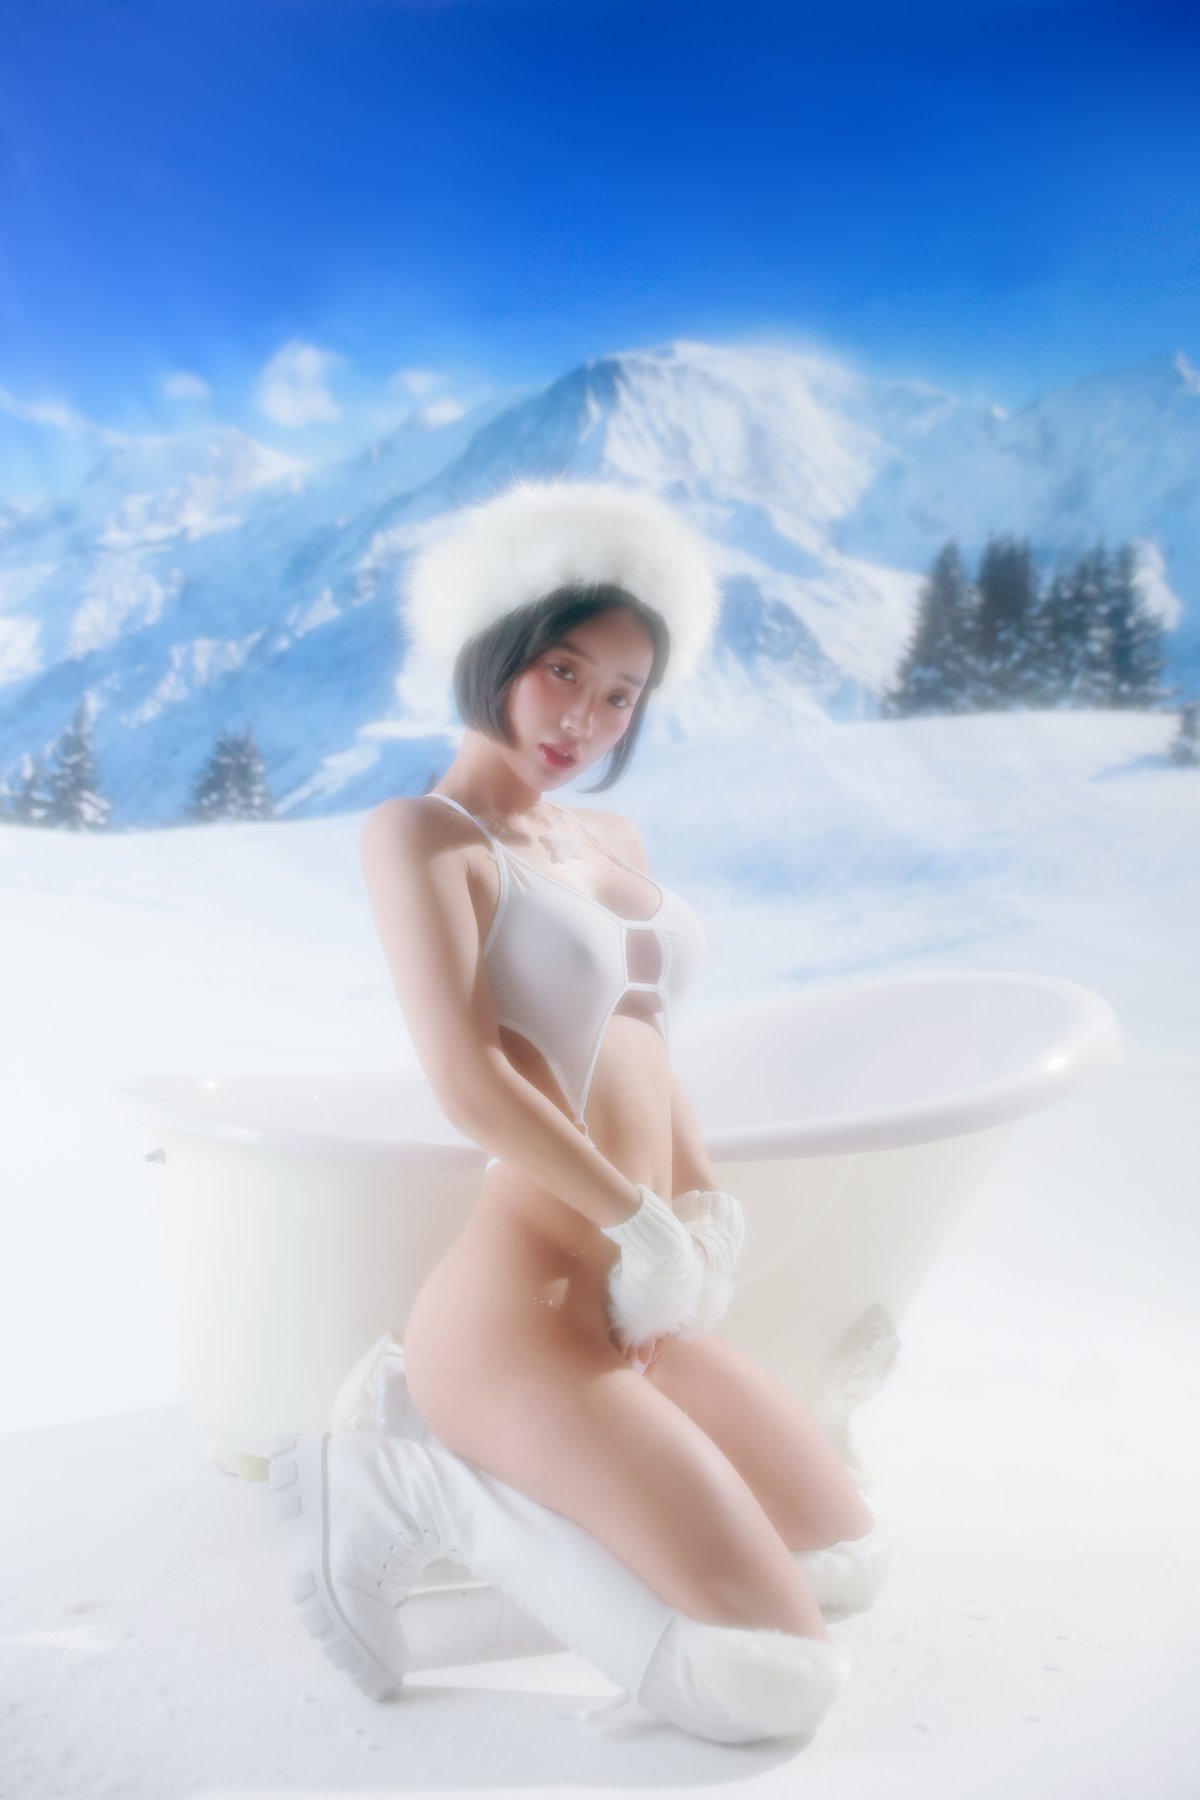 Pinkpie Booty Queen Vol 1 The Hot Body Of A Lost Girl In Snow Garden 0023 4348742463.jpg